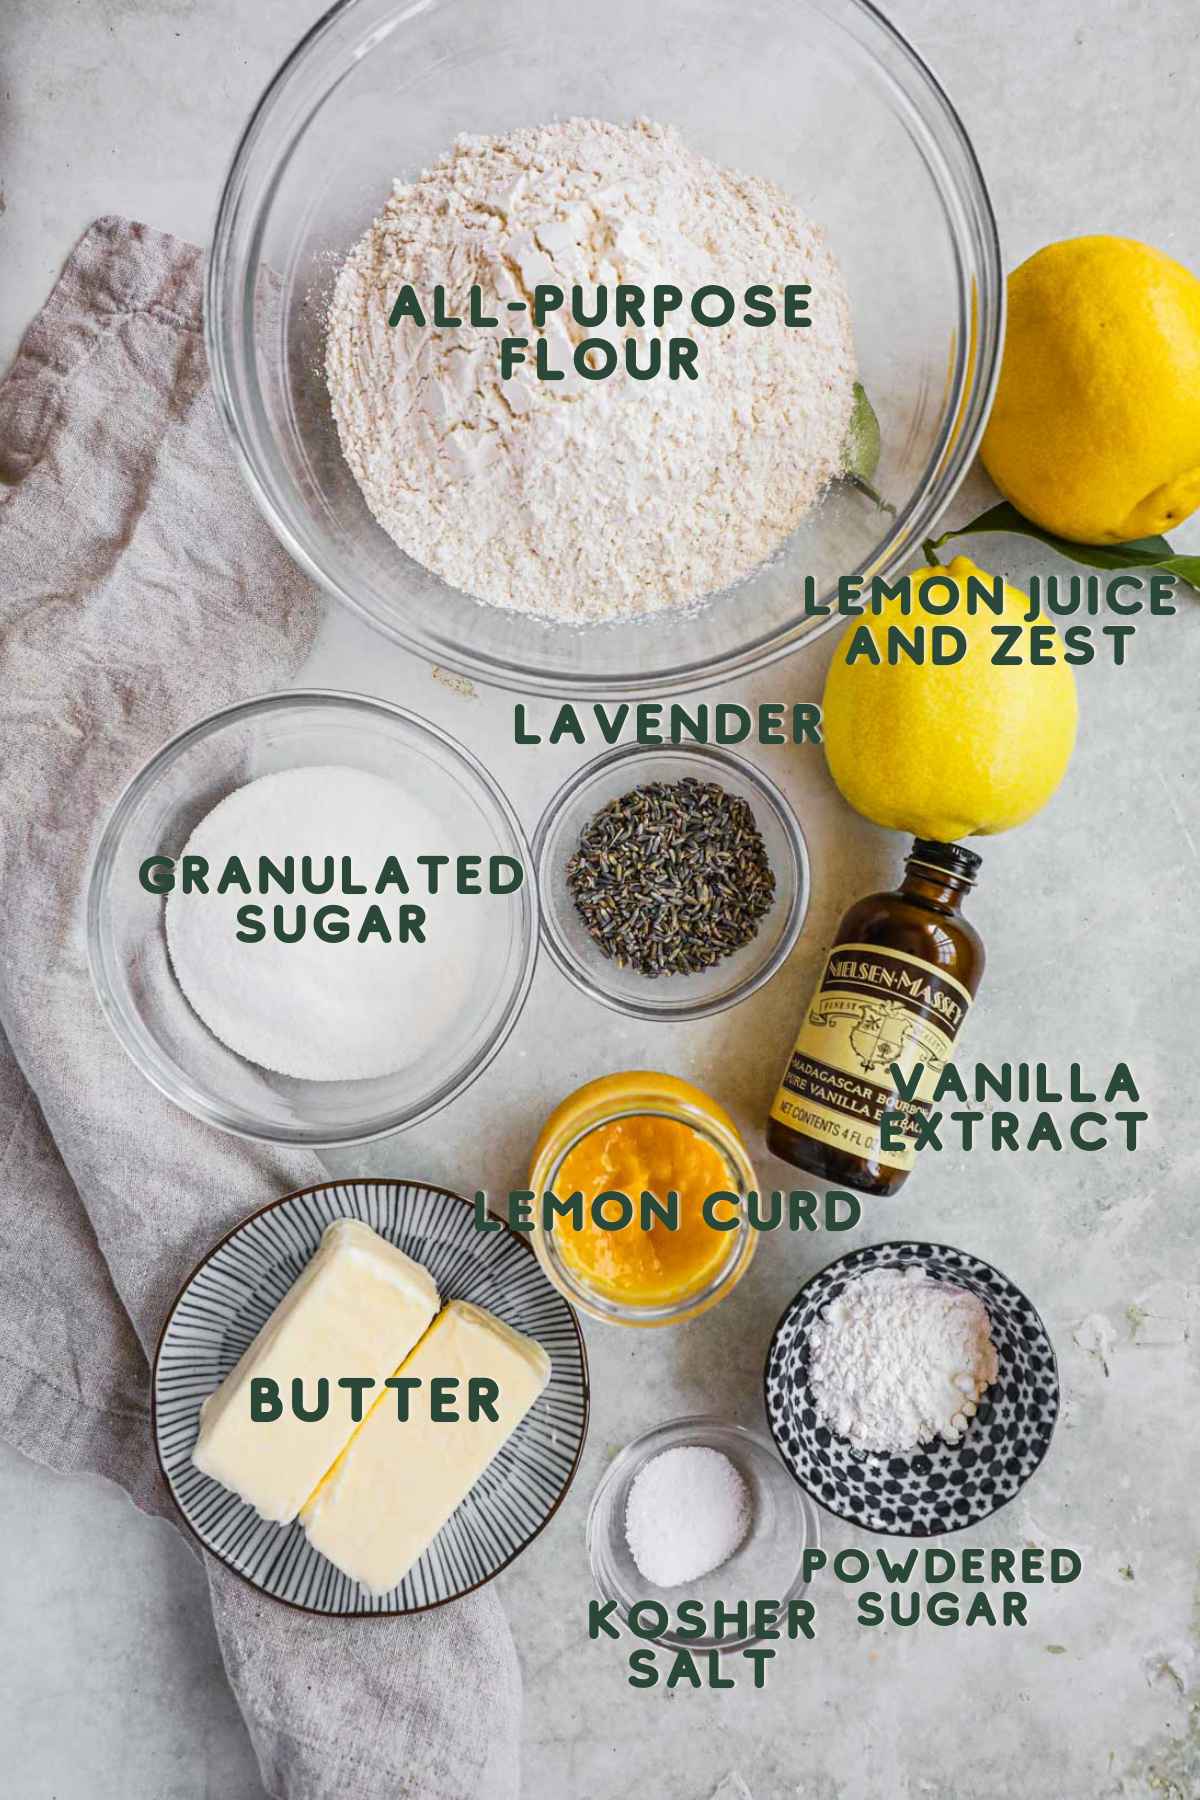 Ingredients for lavender lemon curd cookies, flour, lemon juice and zest, sugar, lavender, vanilla extract, lemon curd, salt, butter, powdered sugar.